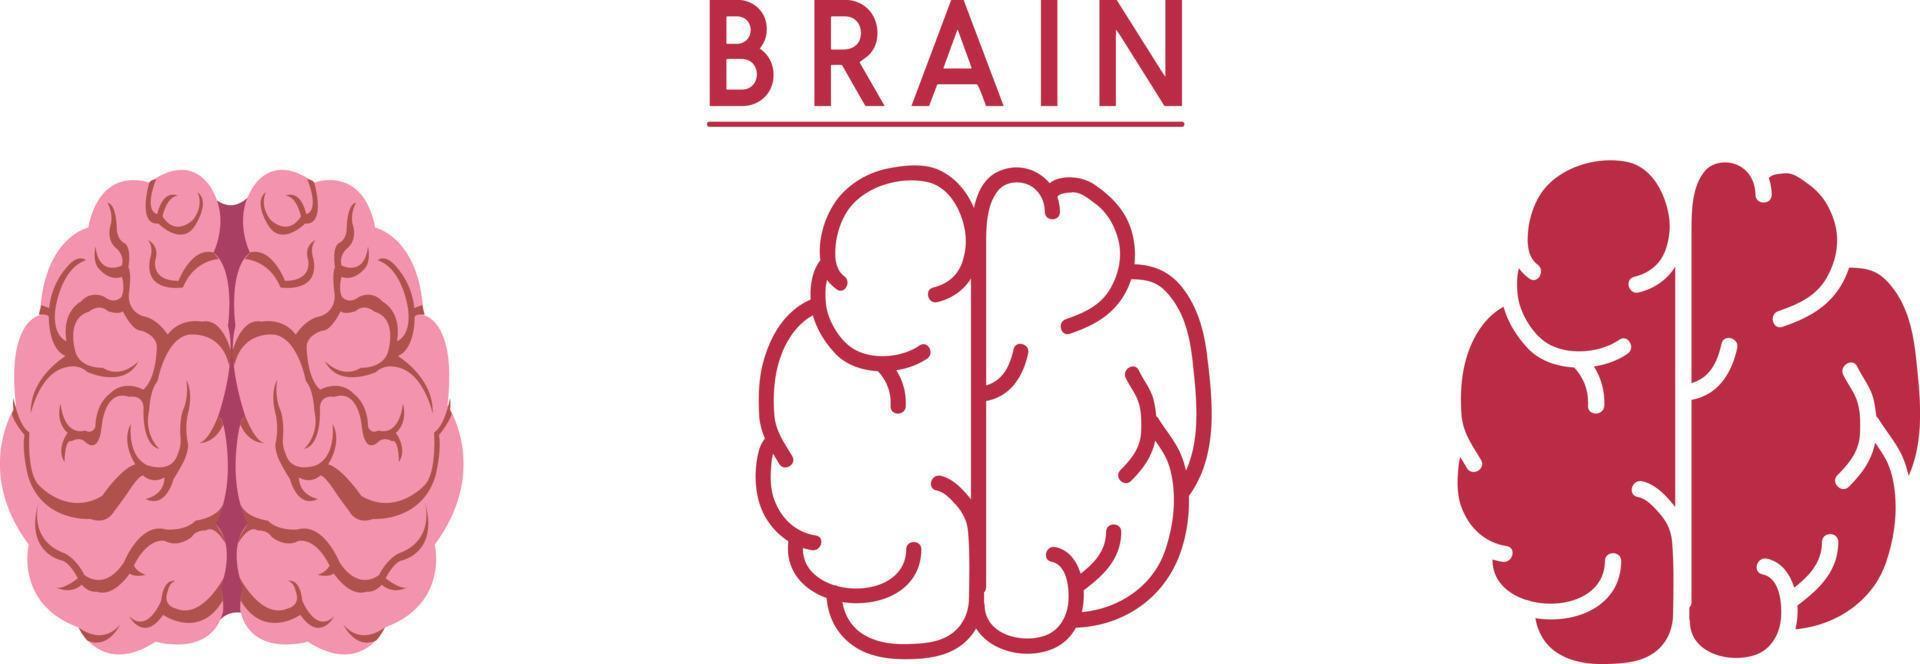 símbolo e ícone do cérebro humano vetor